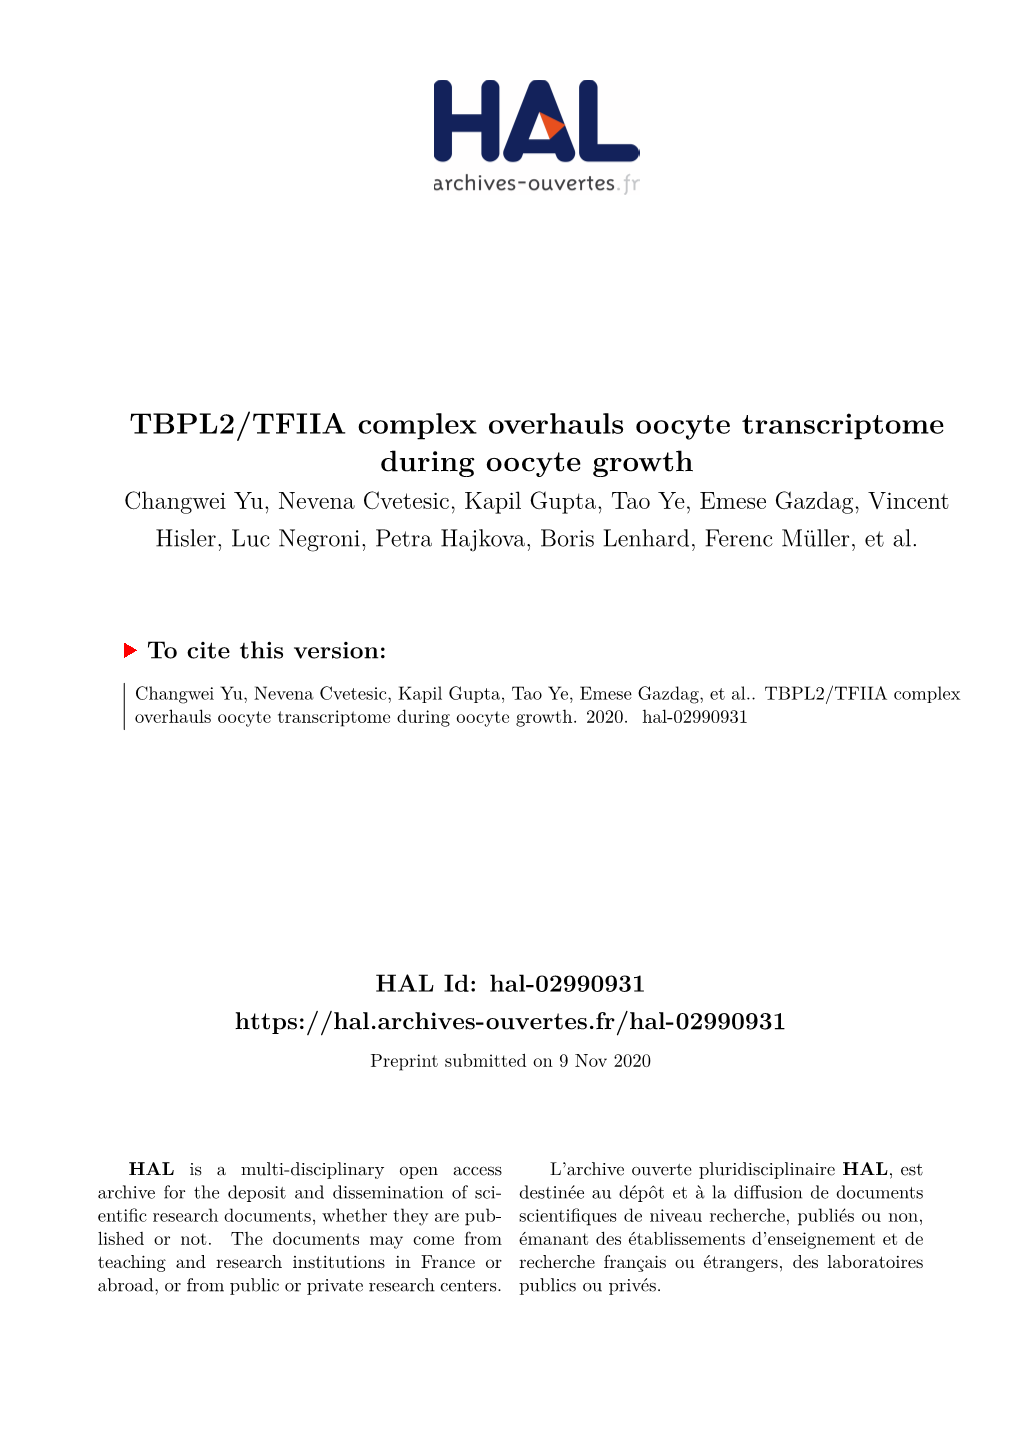 TBPL2/TFIIA Complex Overhauls Oocyte Transcriptome During Oocyte Growth